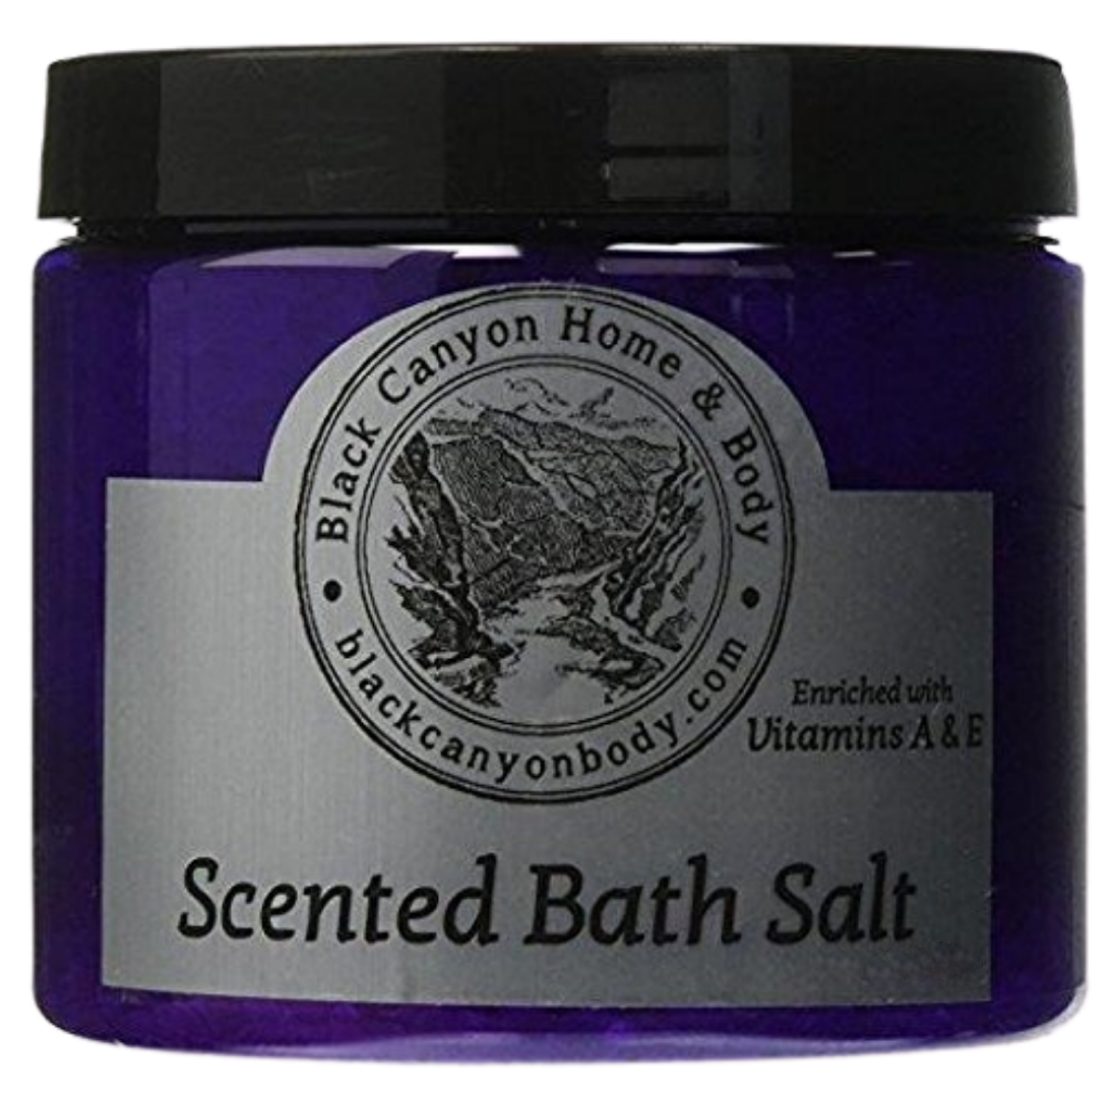 Black Canyon Wild Cherry Vanilla Scented Sea Salt Bath Soak